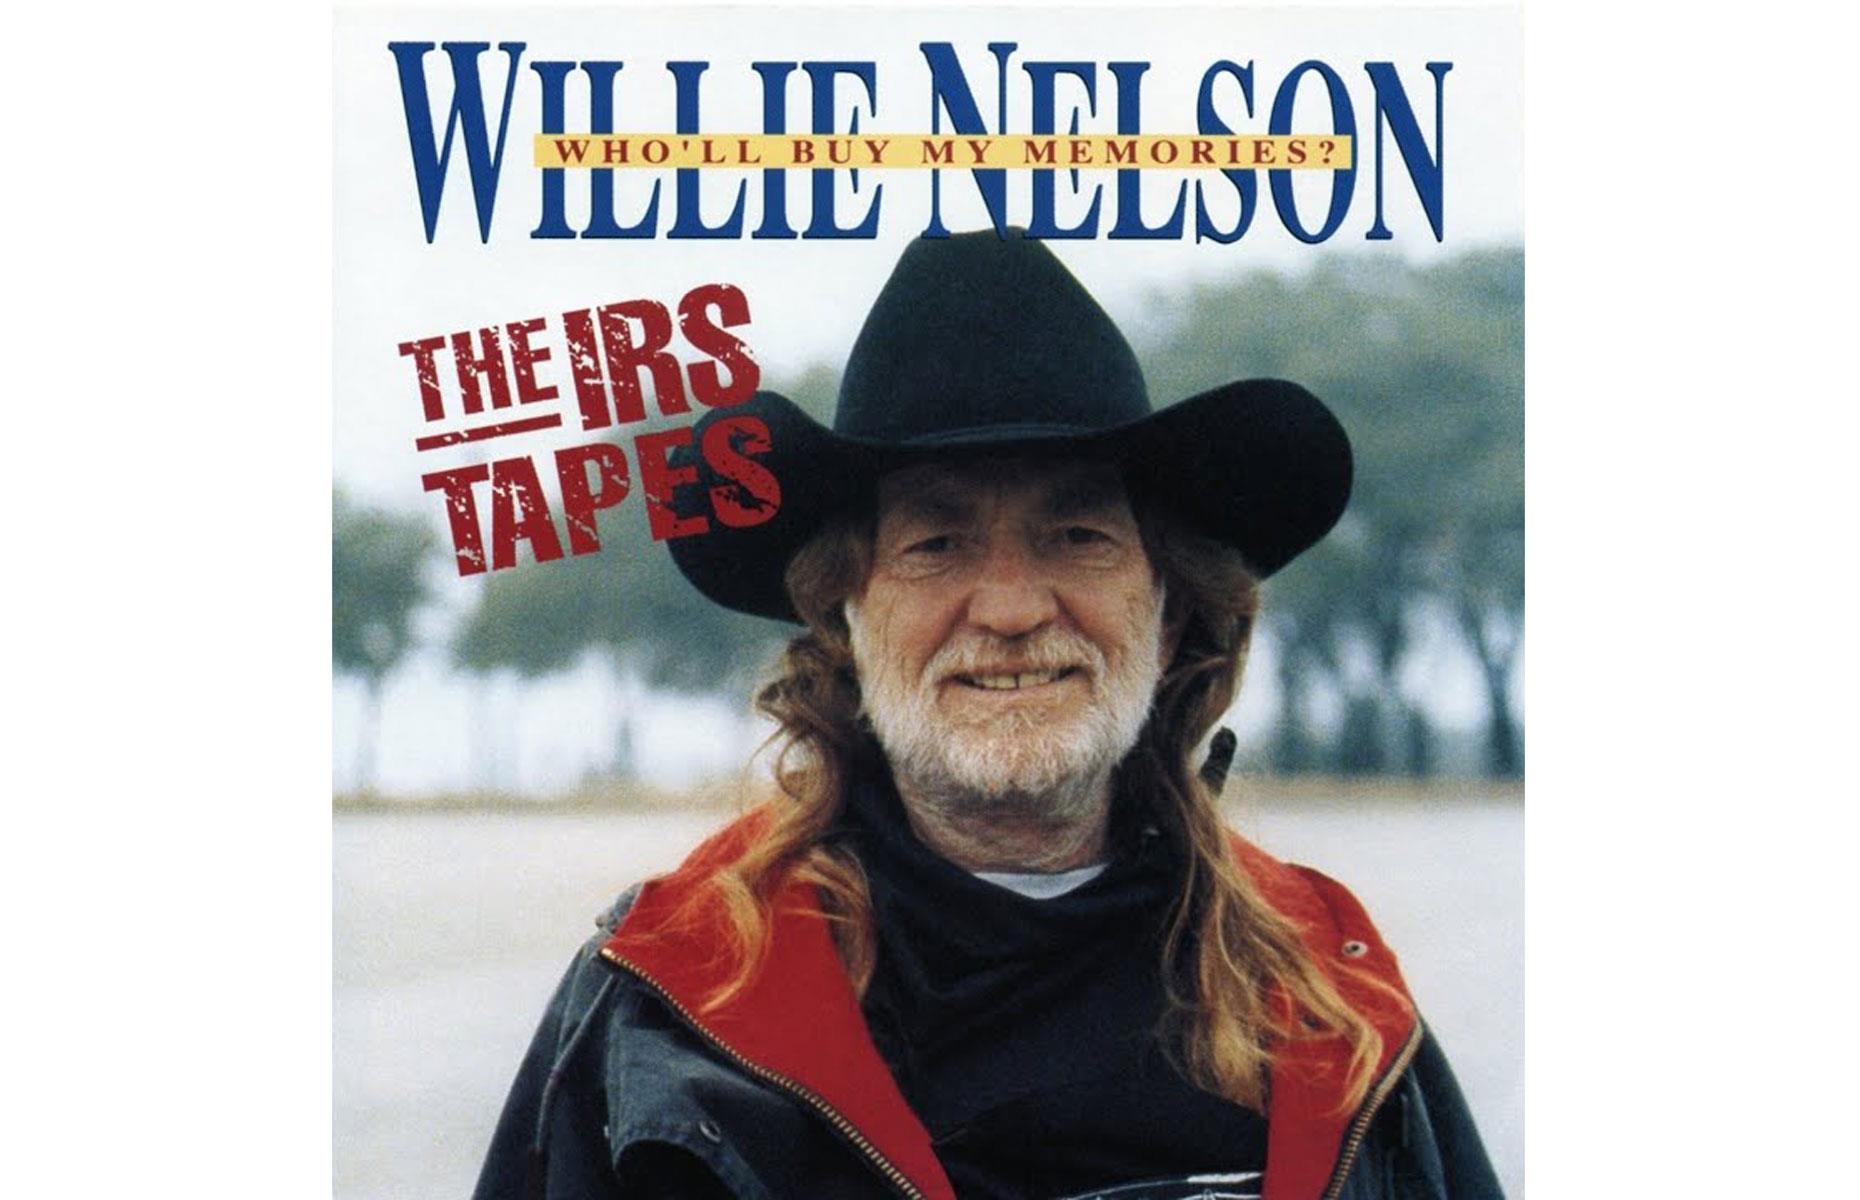 Willie Nelson: up to $61.9 million (£47.4m) in debt